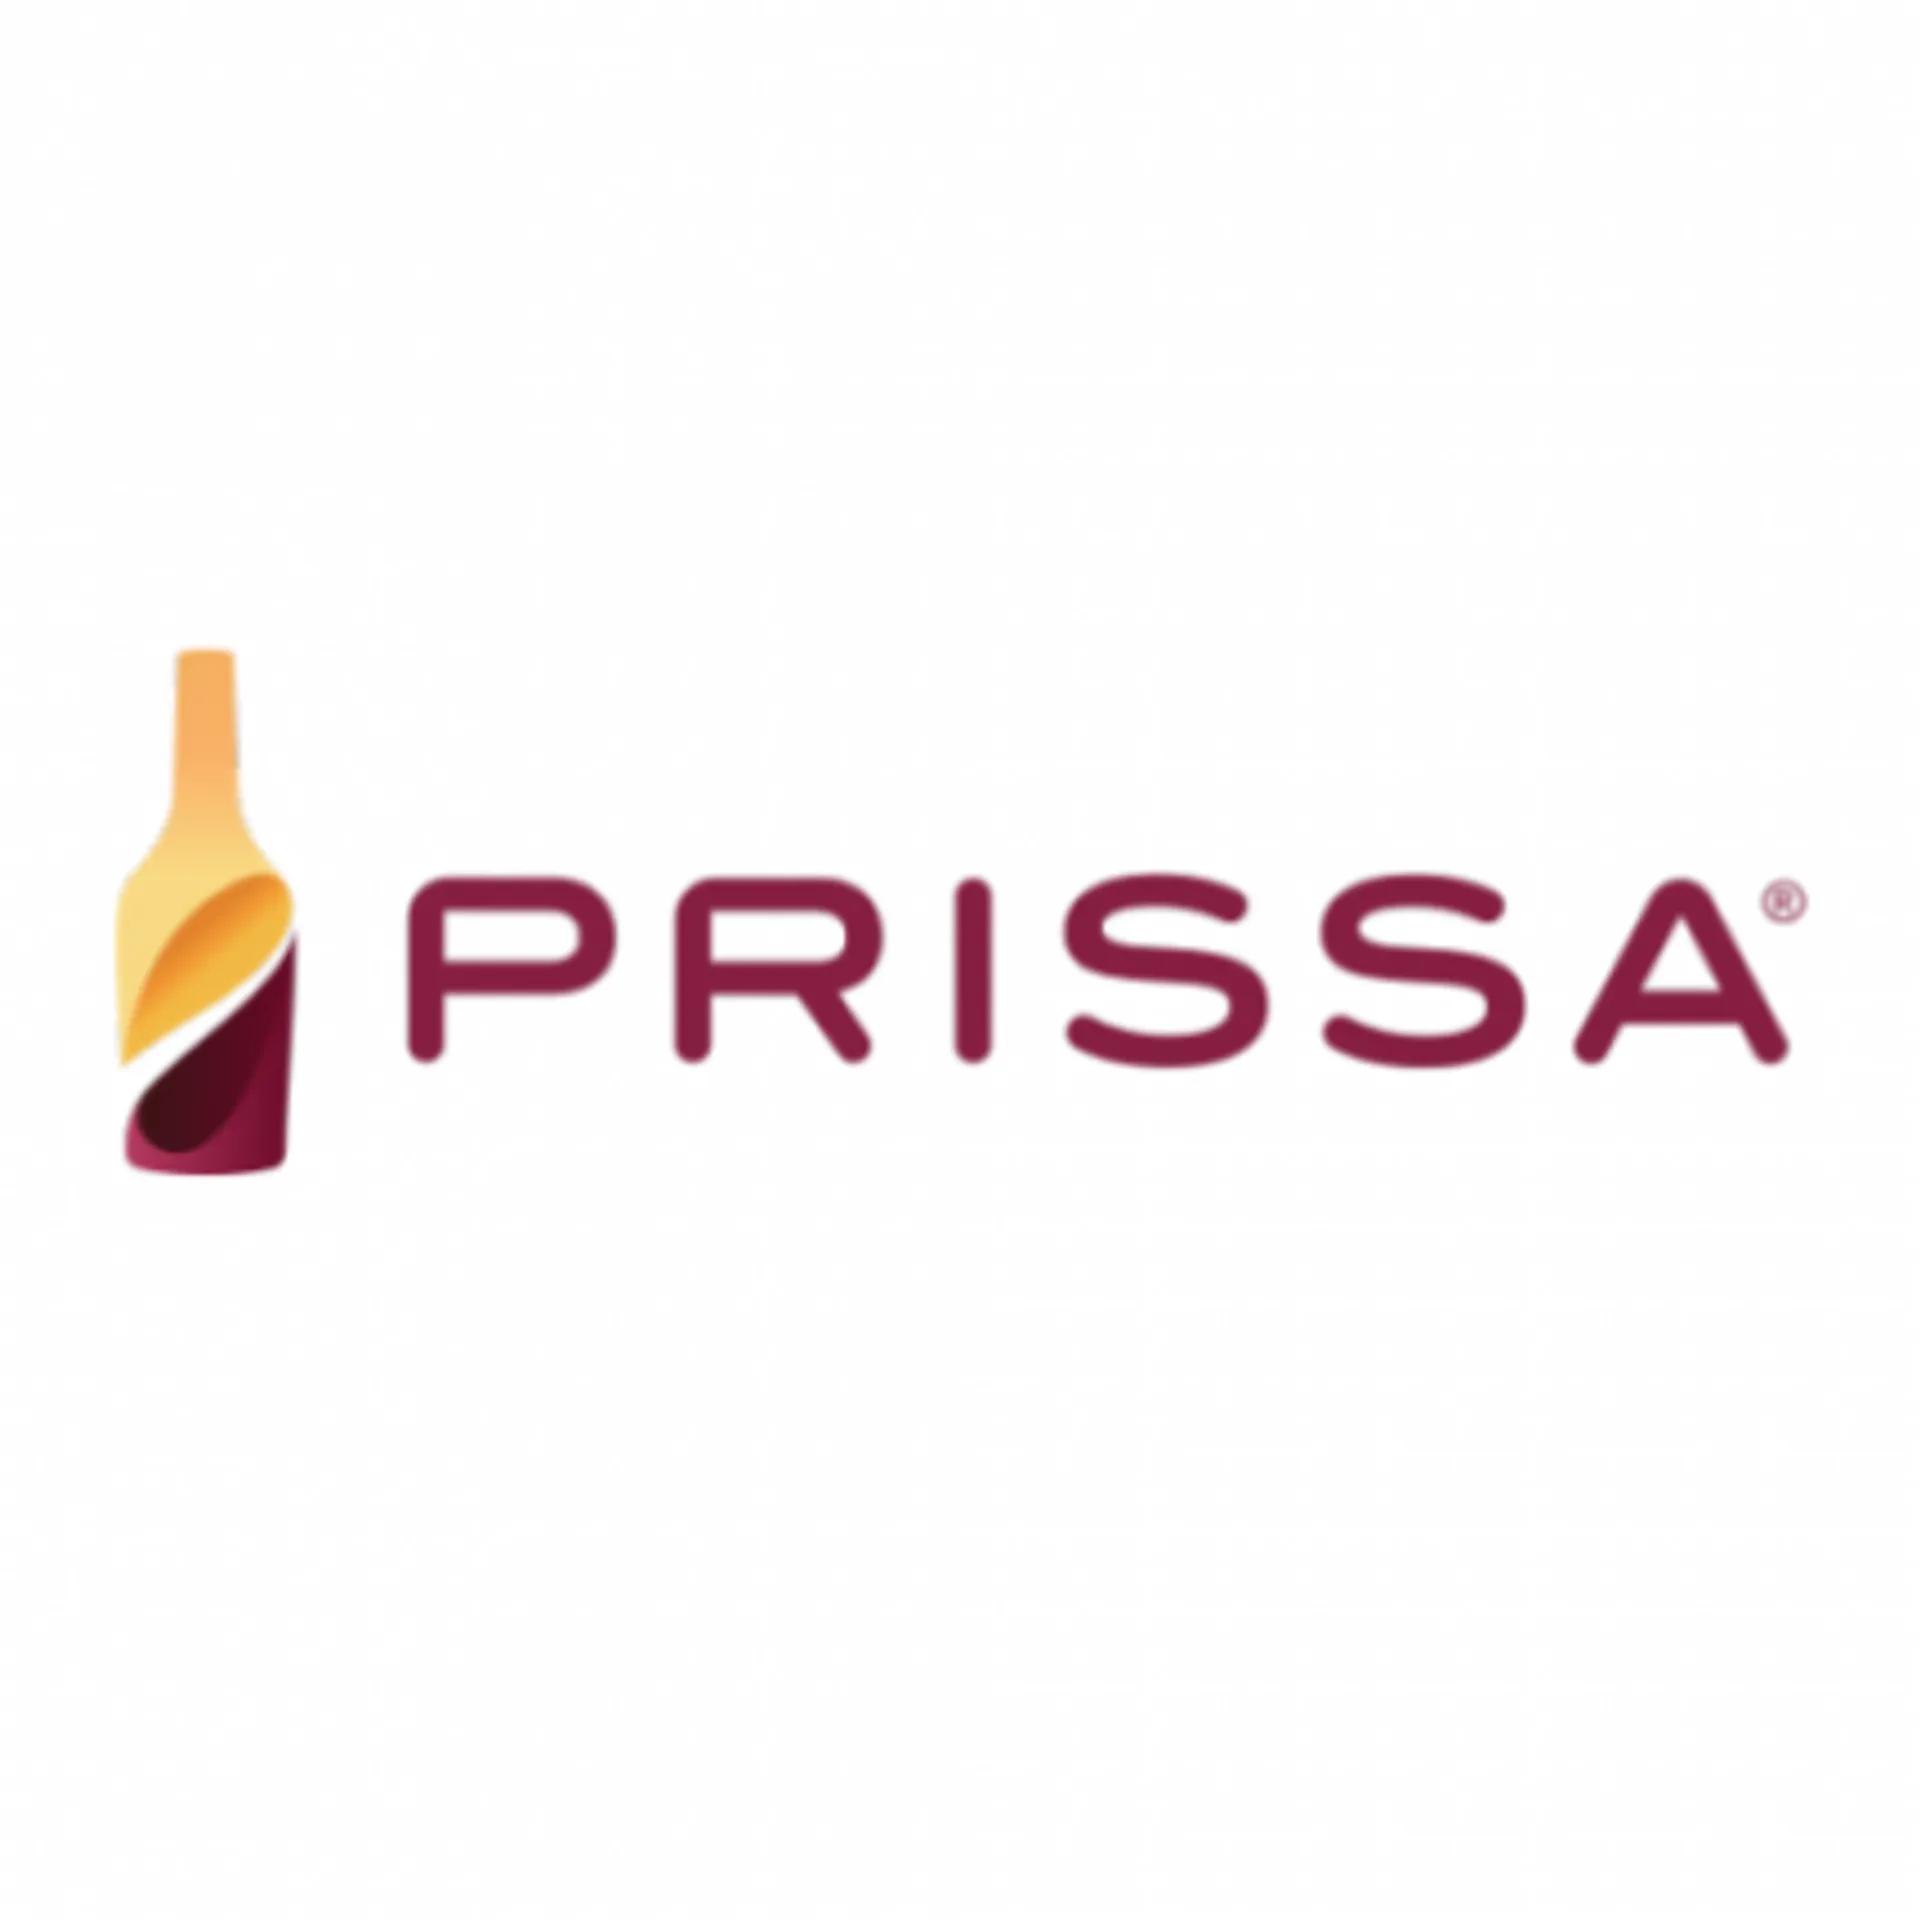 PRISSA logo